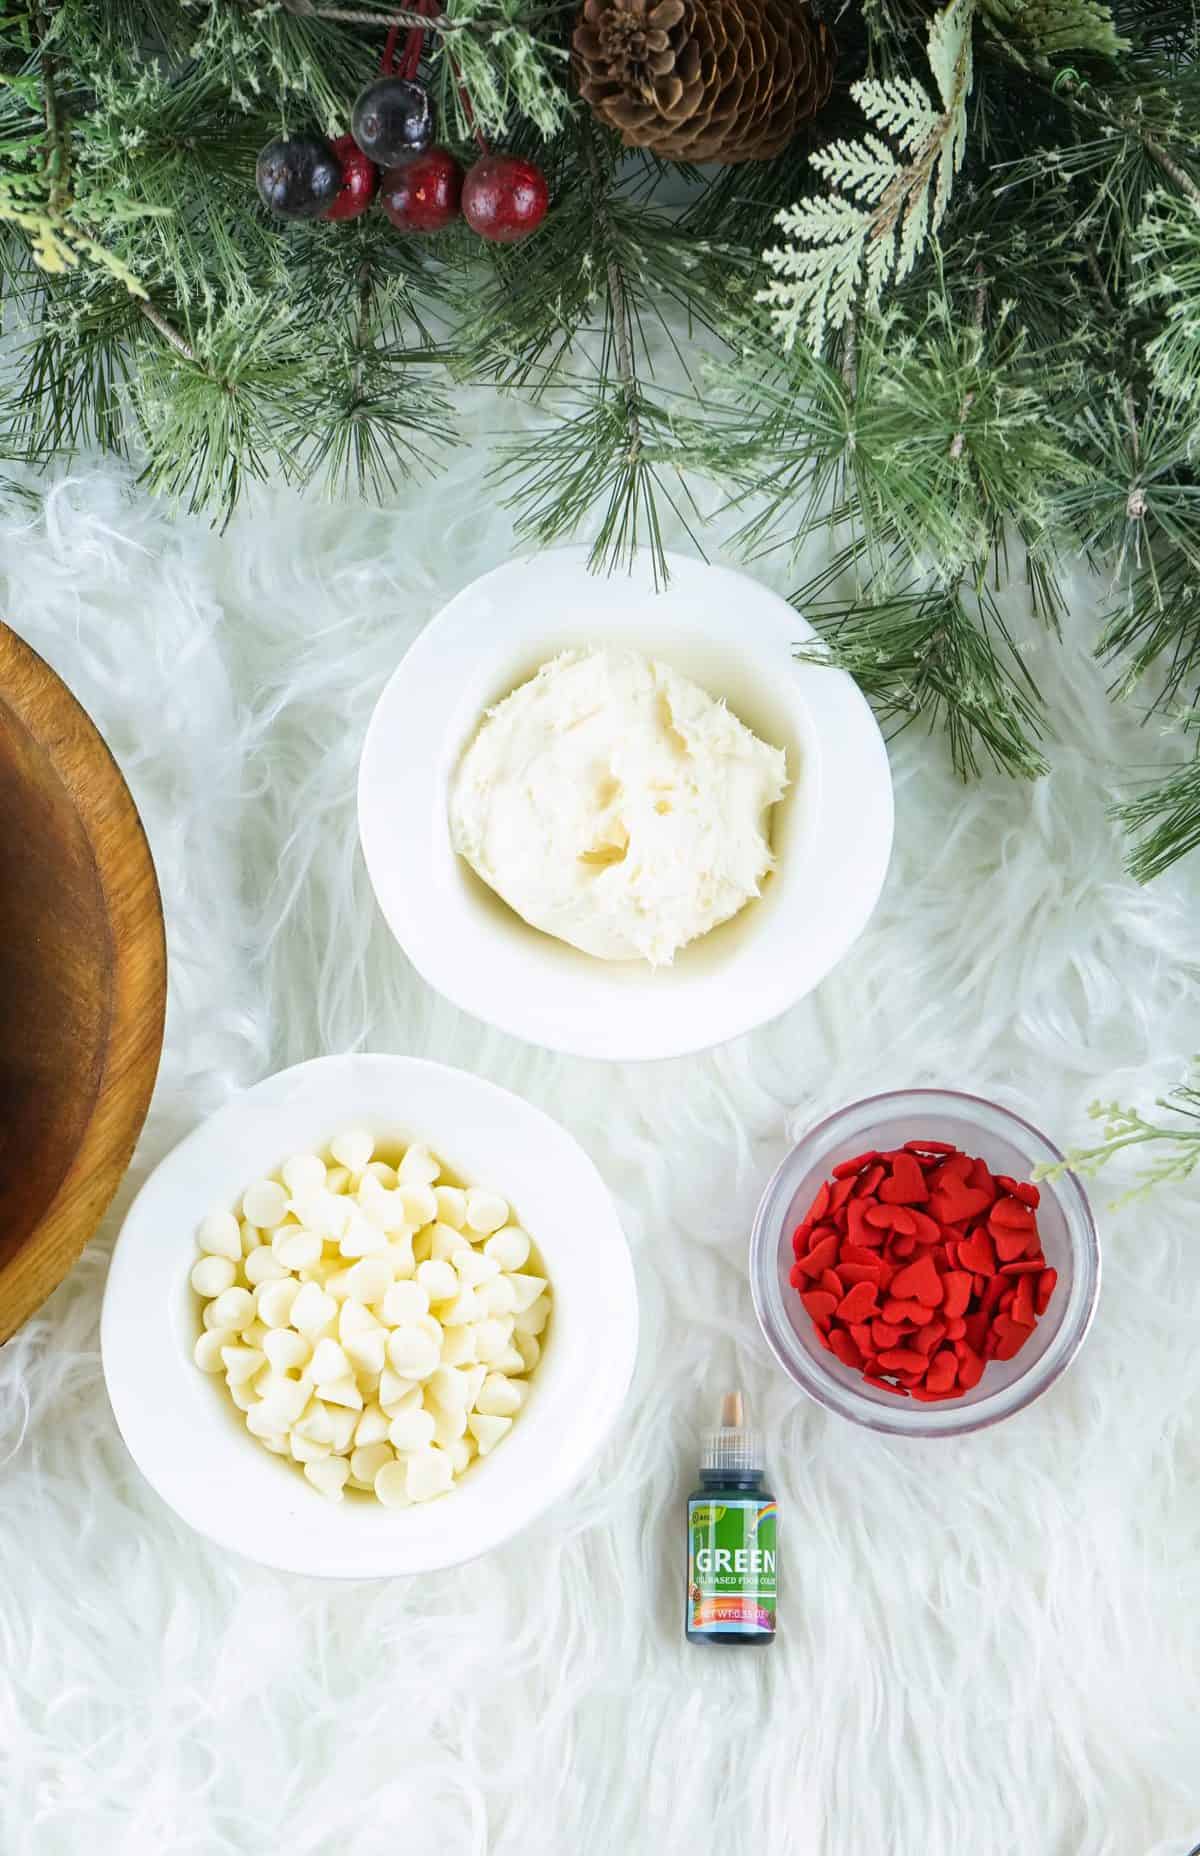 ingredients to make grinch fudge in little white bowls